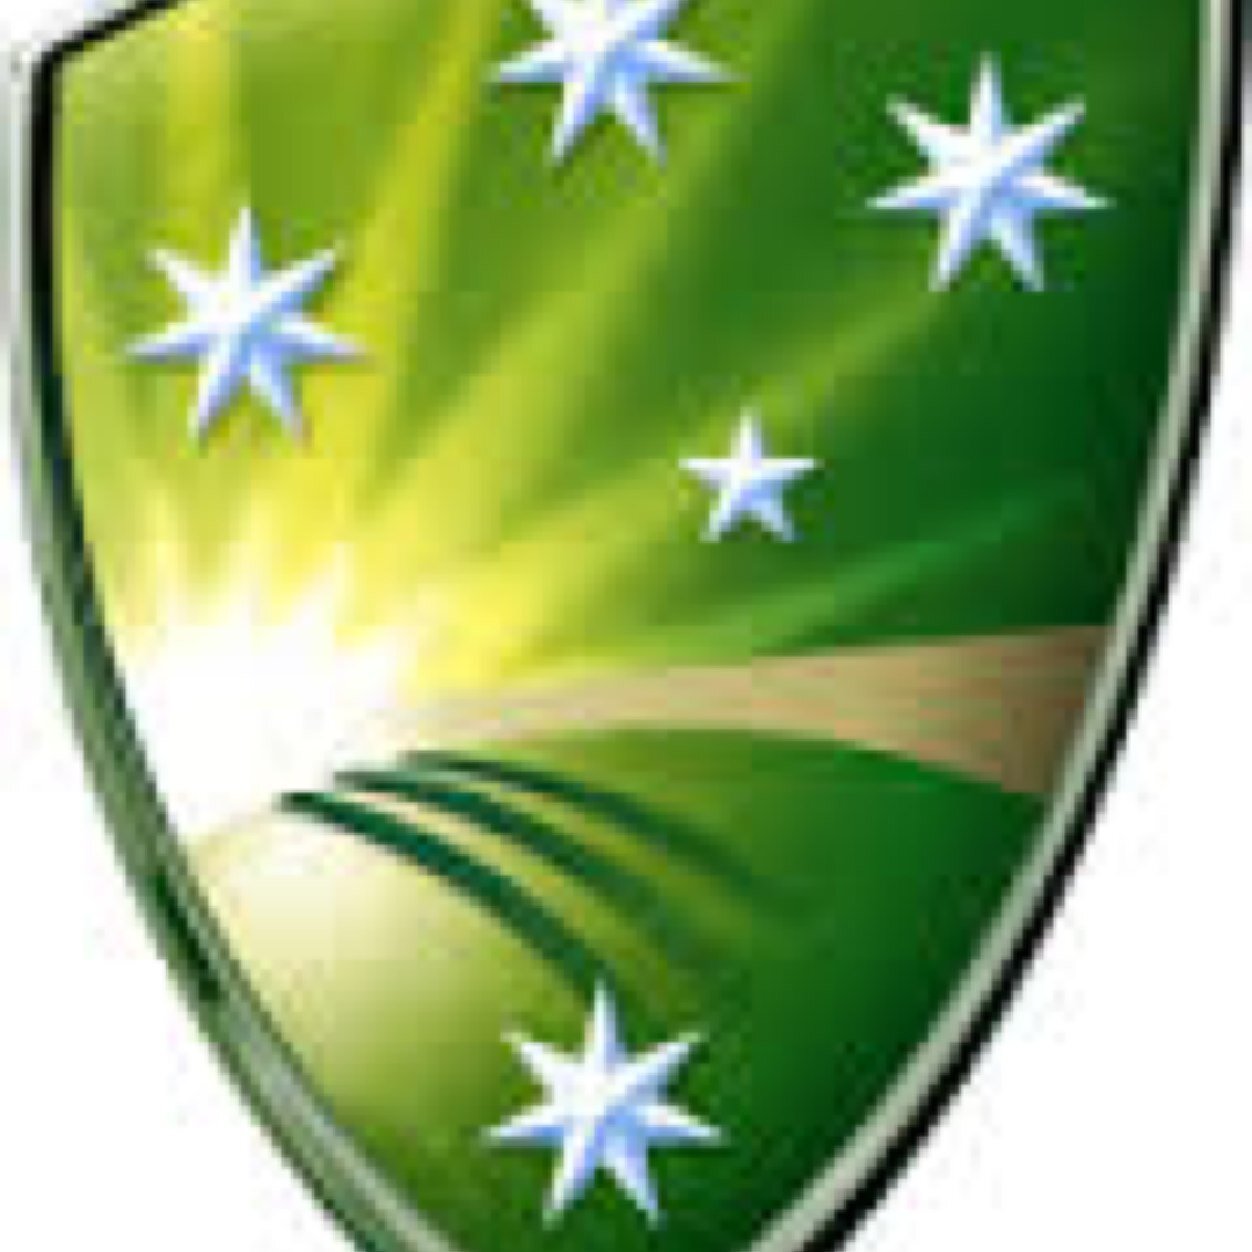 CricketAustralia